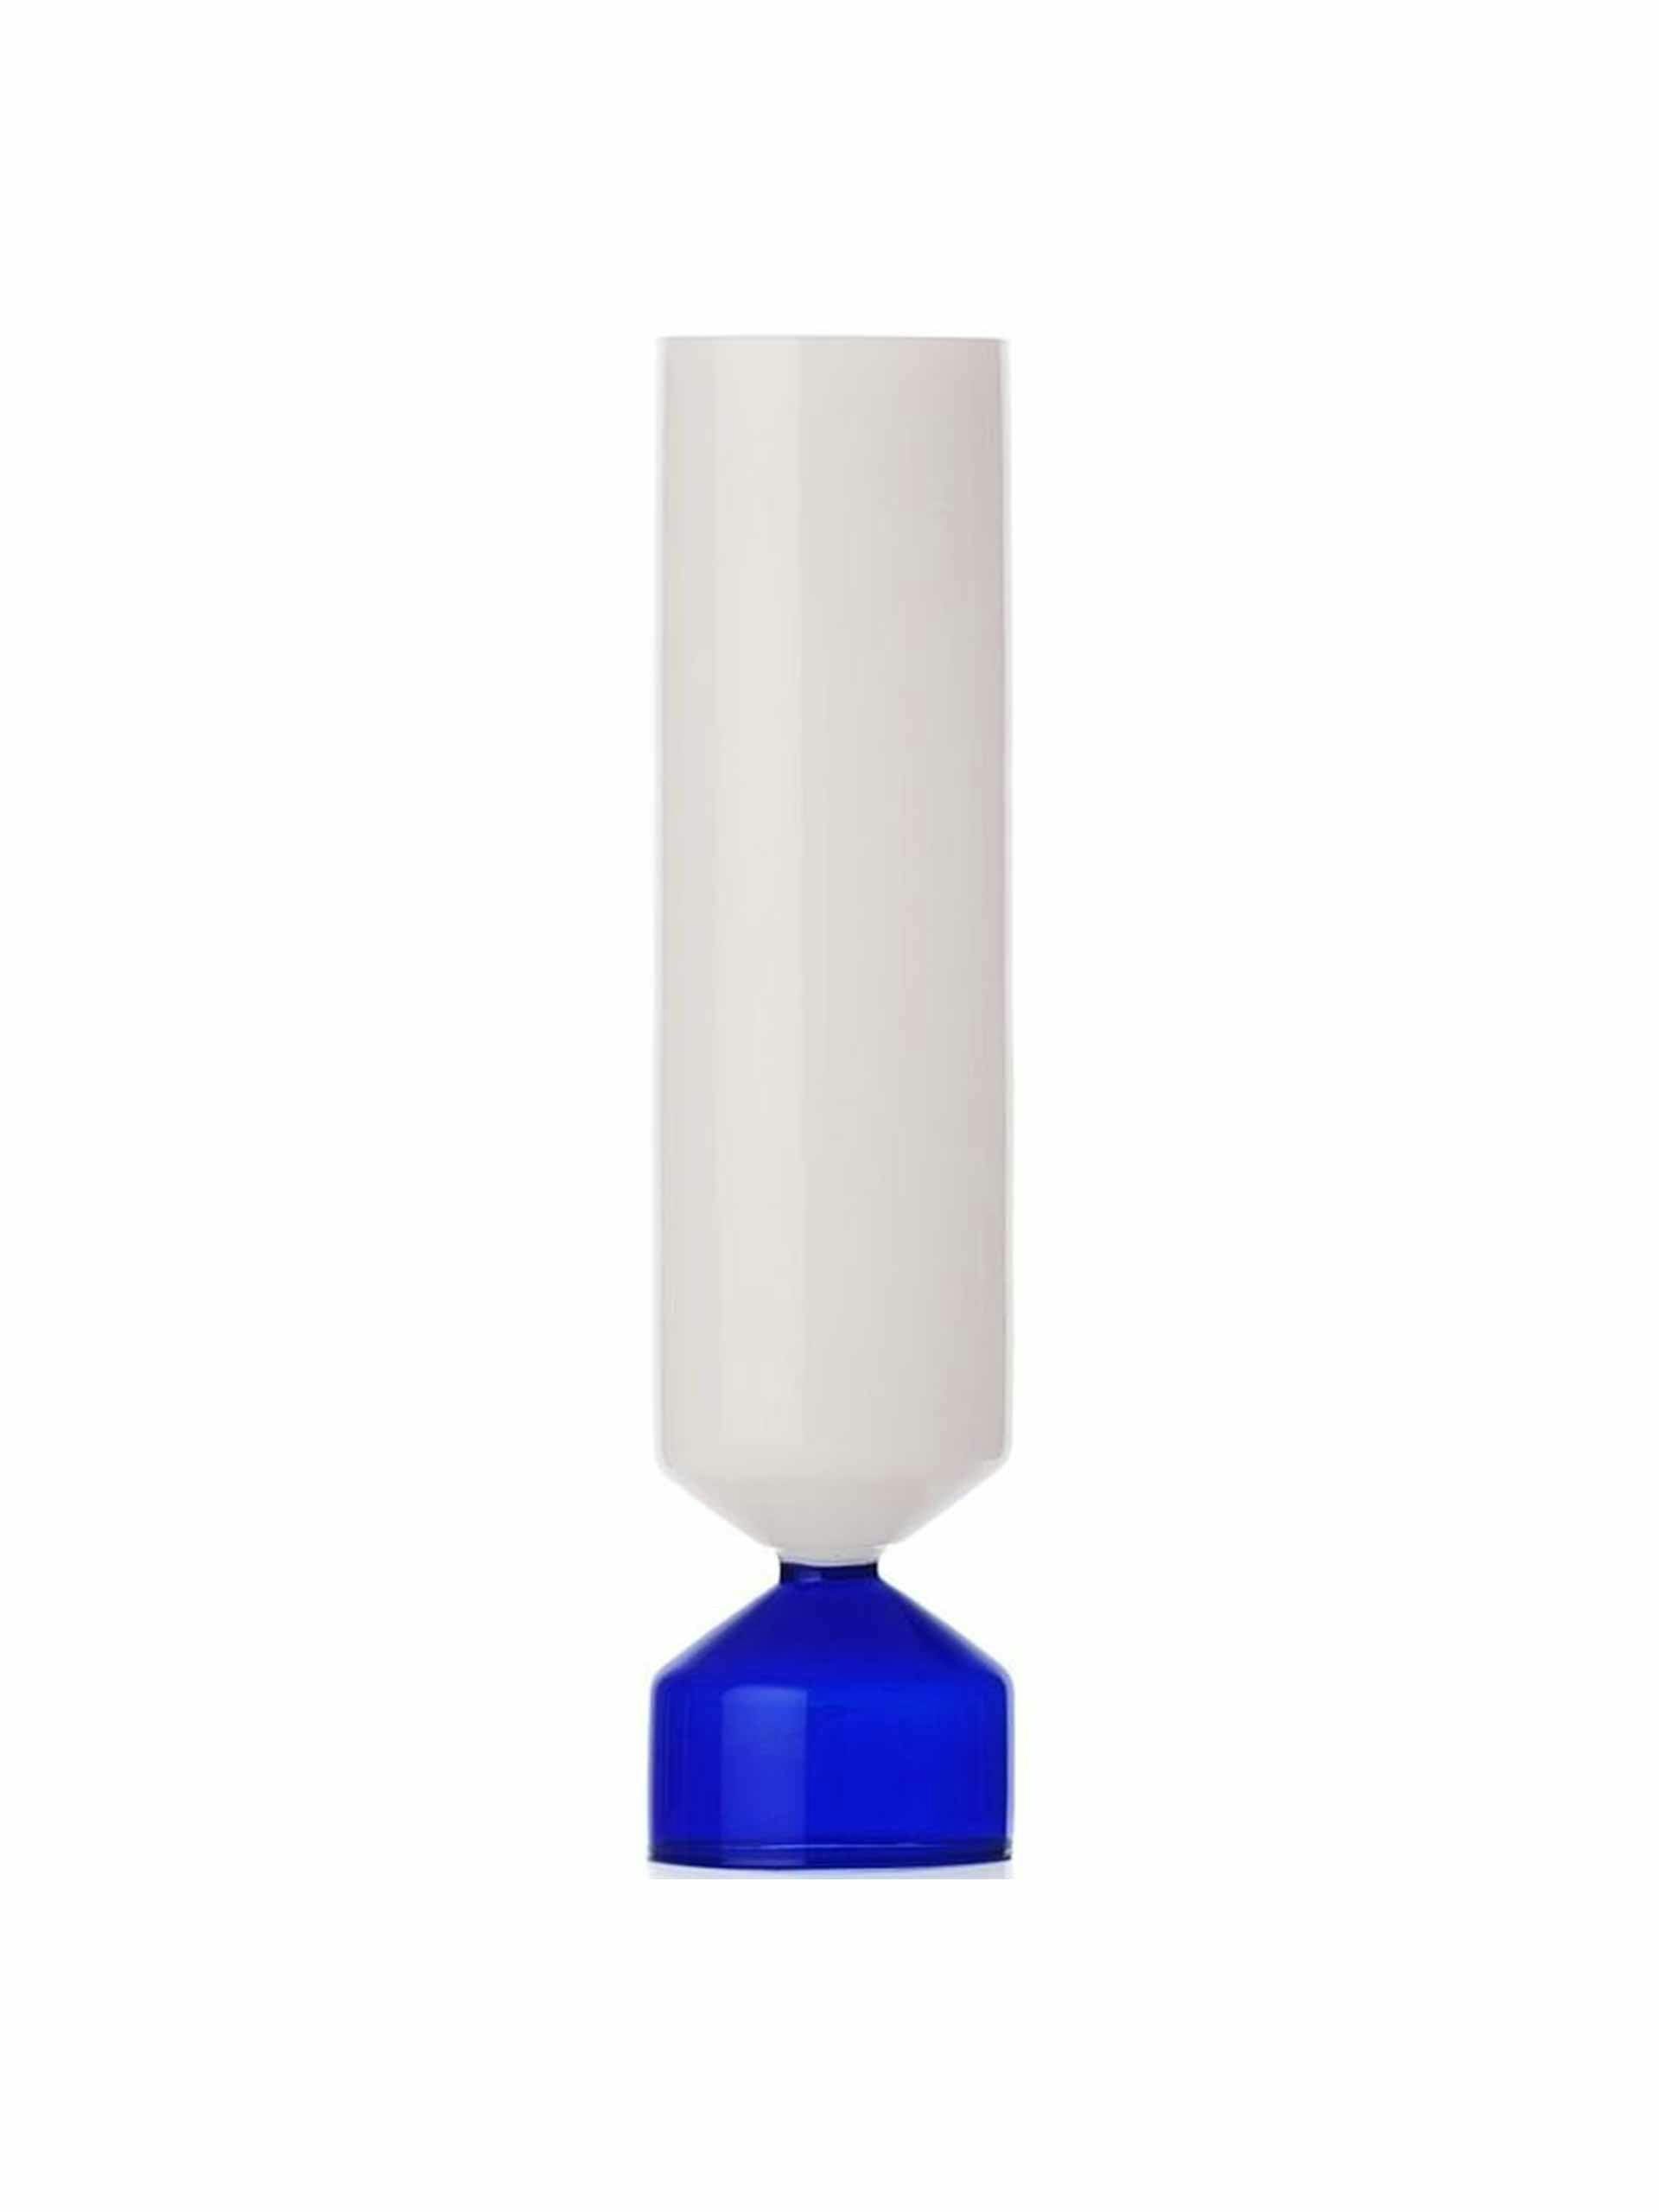 Blue and white vase